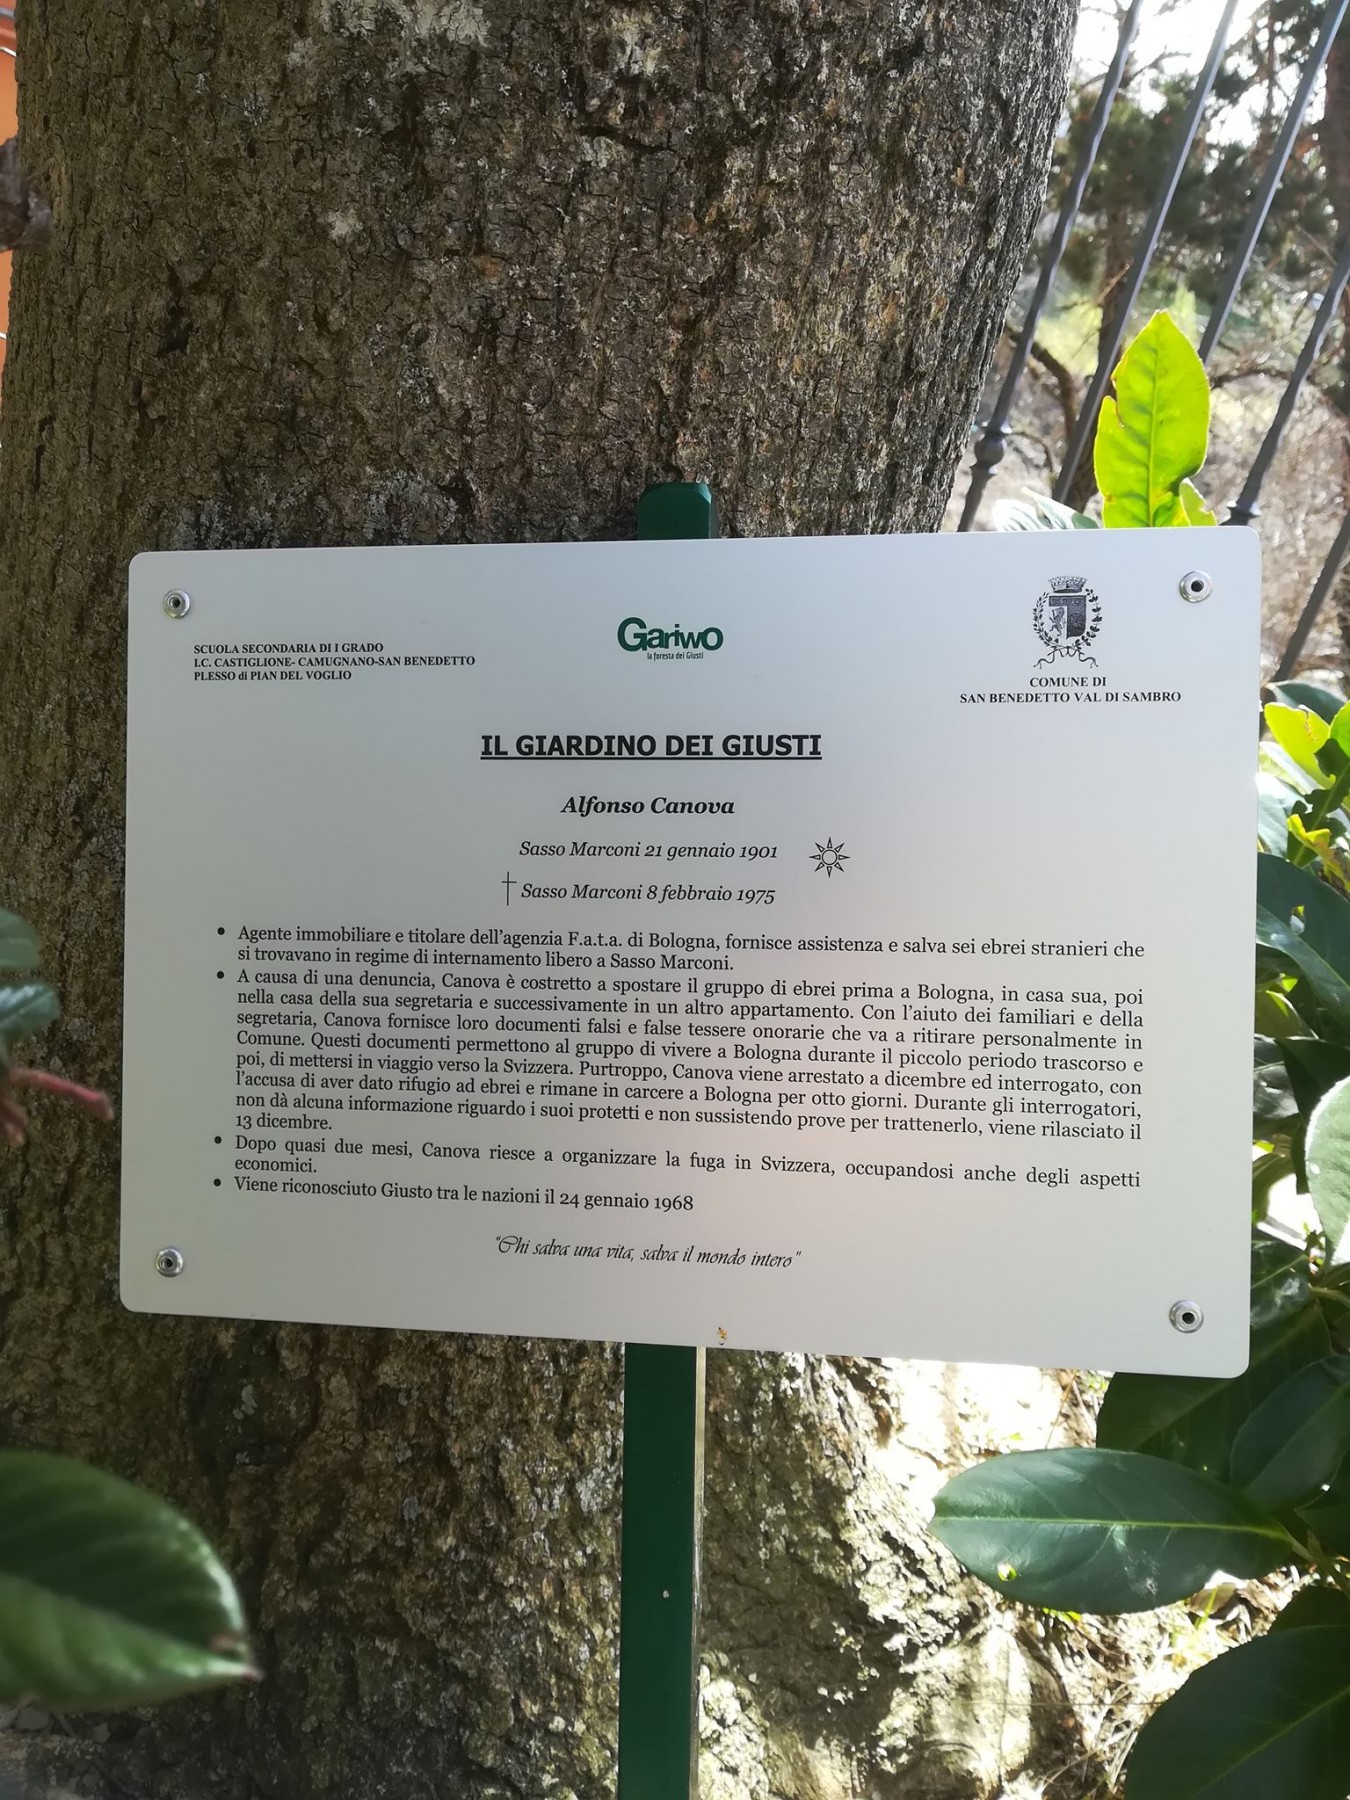 the plaques of the new Garden in San Benedetto Val di Sambro 